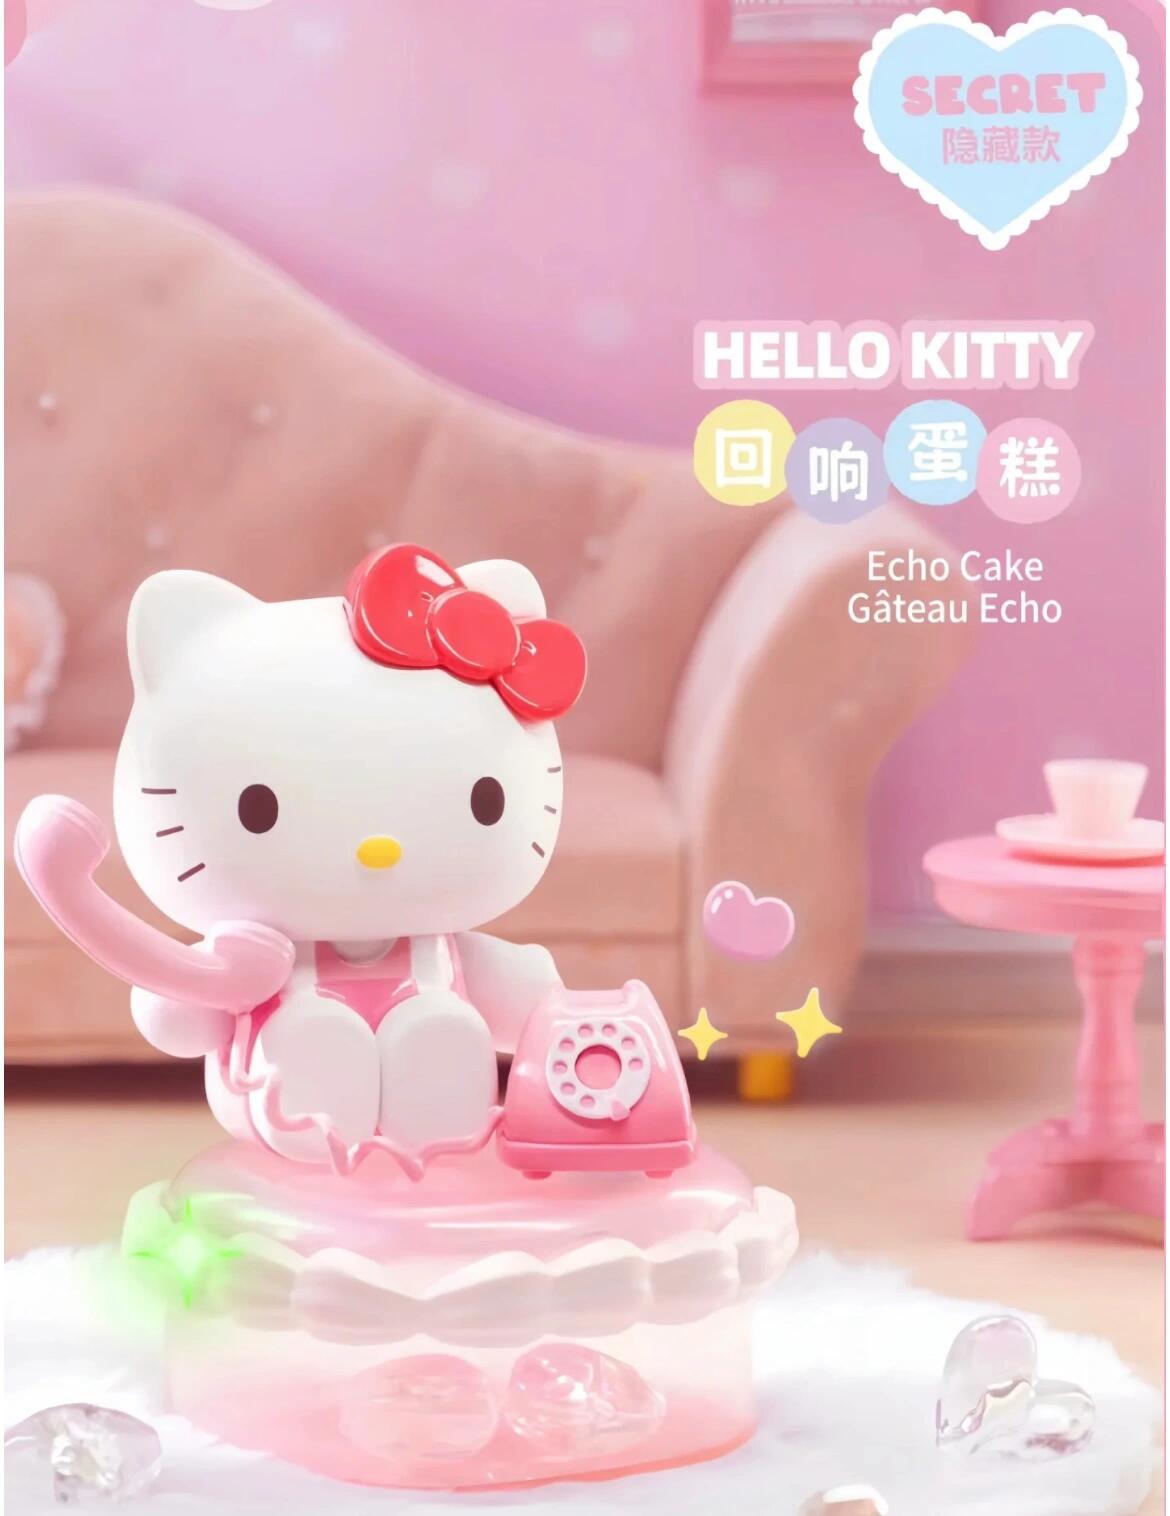 Sanrio Hellokitty 50th Anniversary Series Blind Box Kitty Figurine Ornament